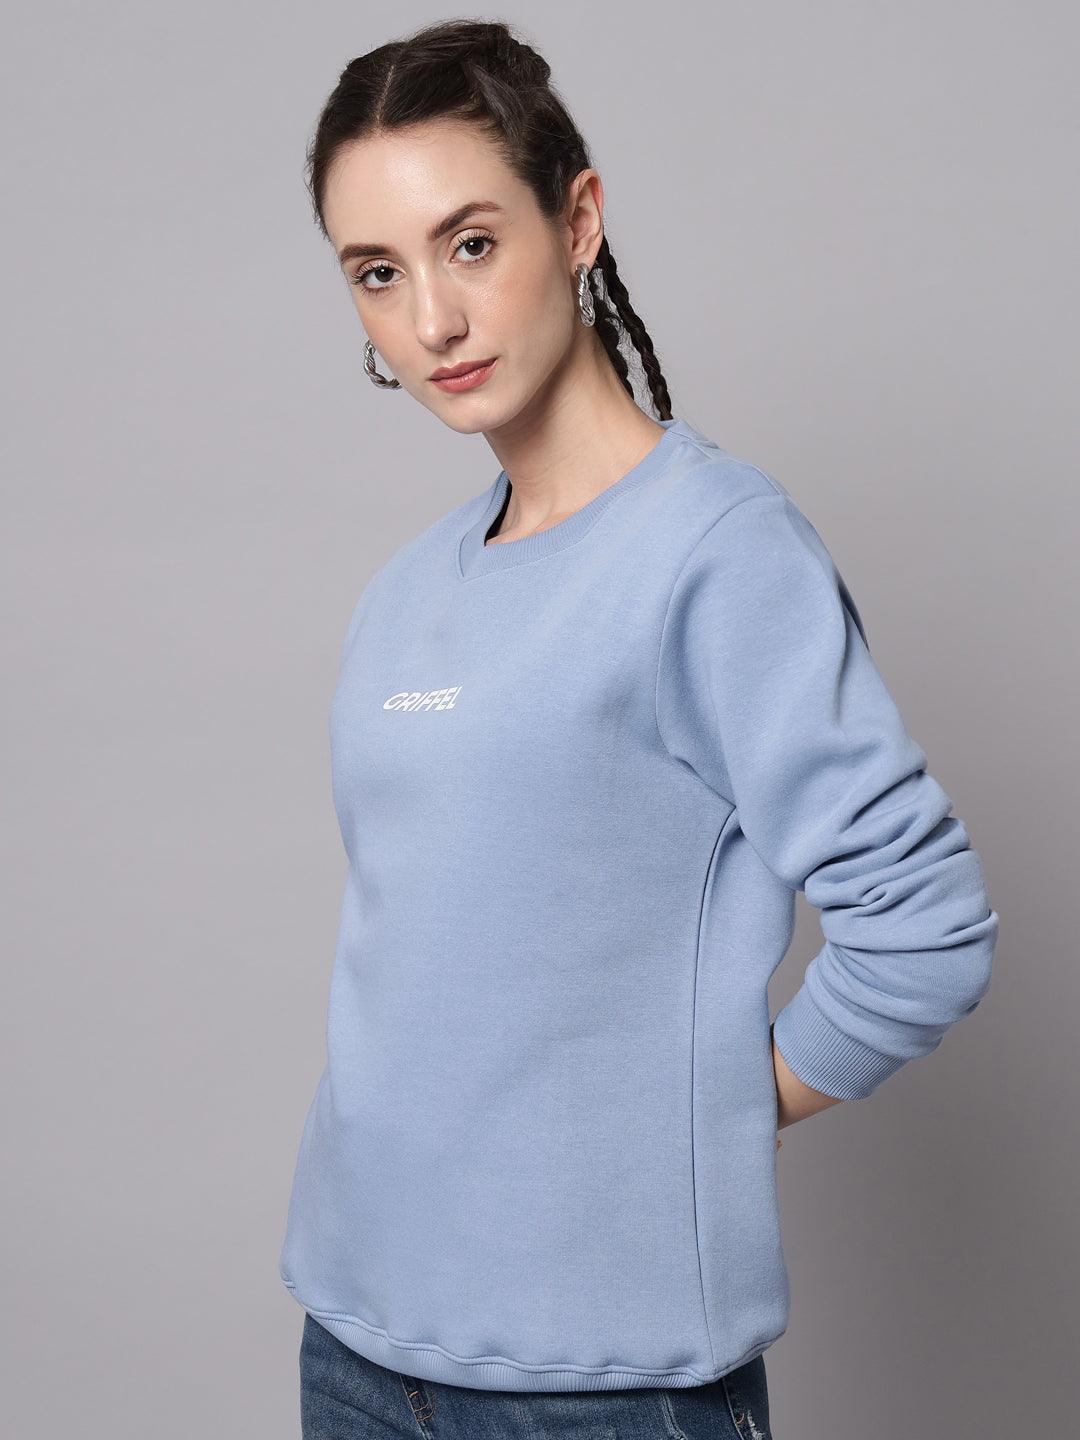 Griffel Women’s Printed Round Neck Sky Blue Cotton Fleece Full Sleeve Sweatshirt - griffel